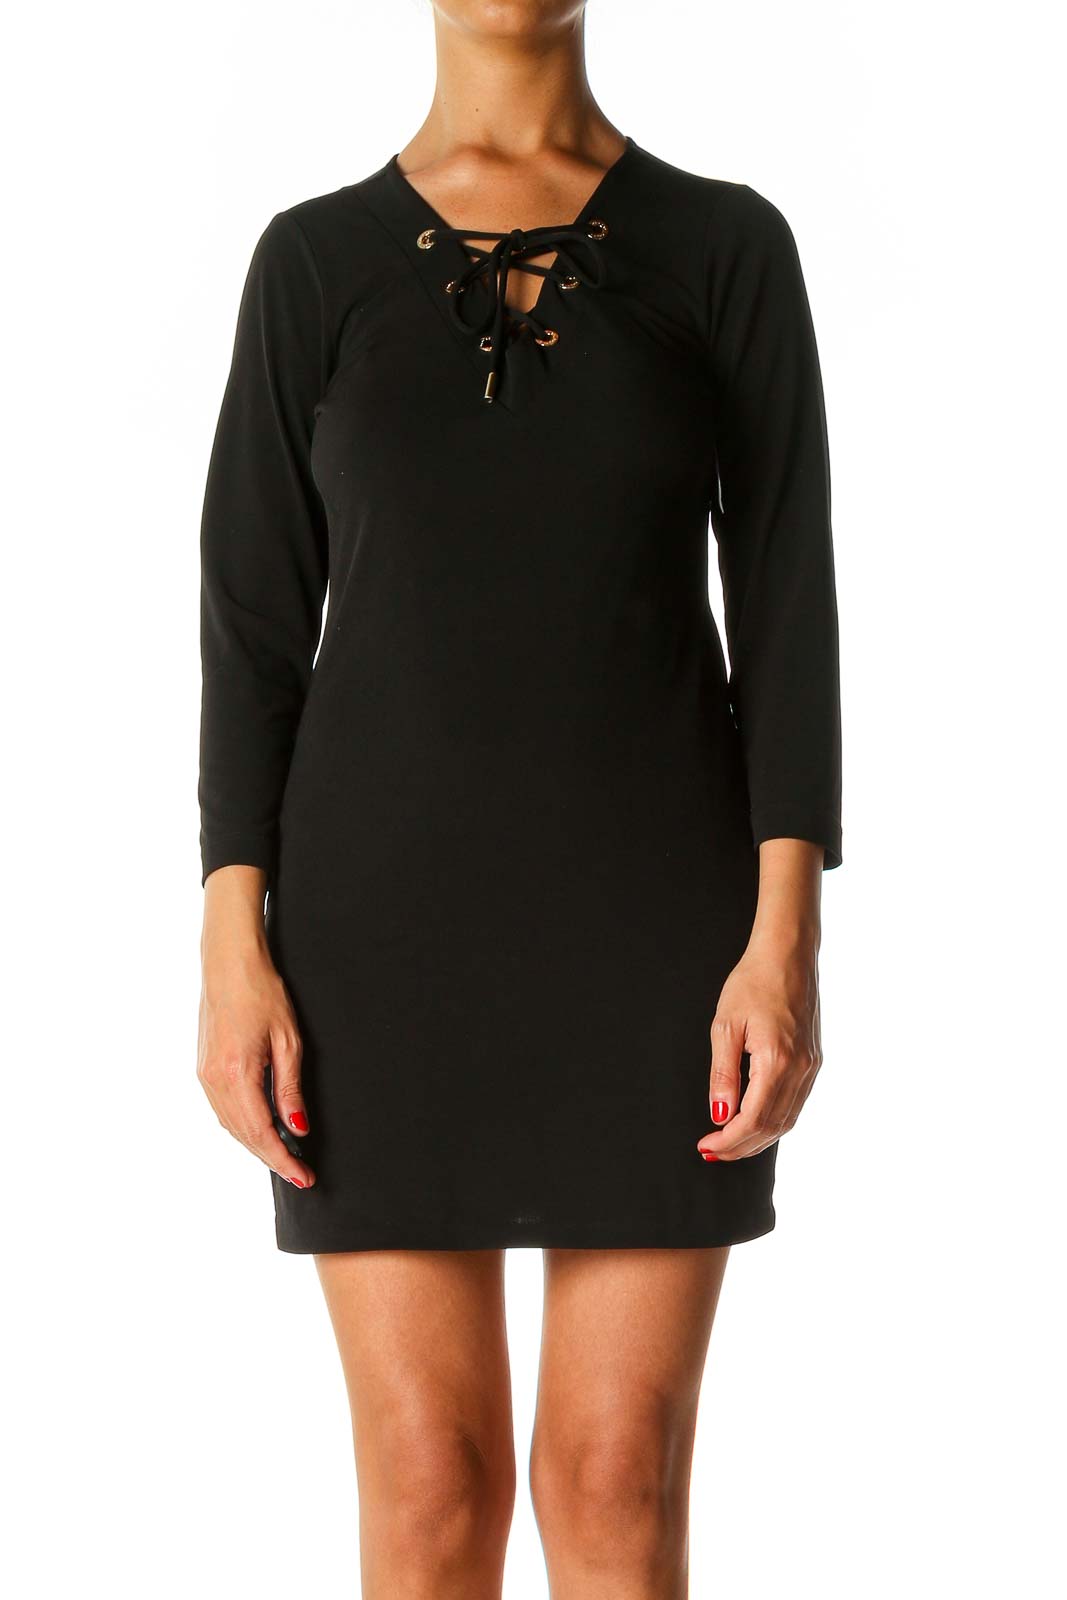 Calvin Klein - Black Solid Shift Dress Polyester Spandex | SilkRoll